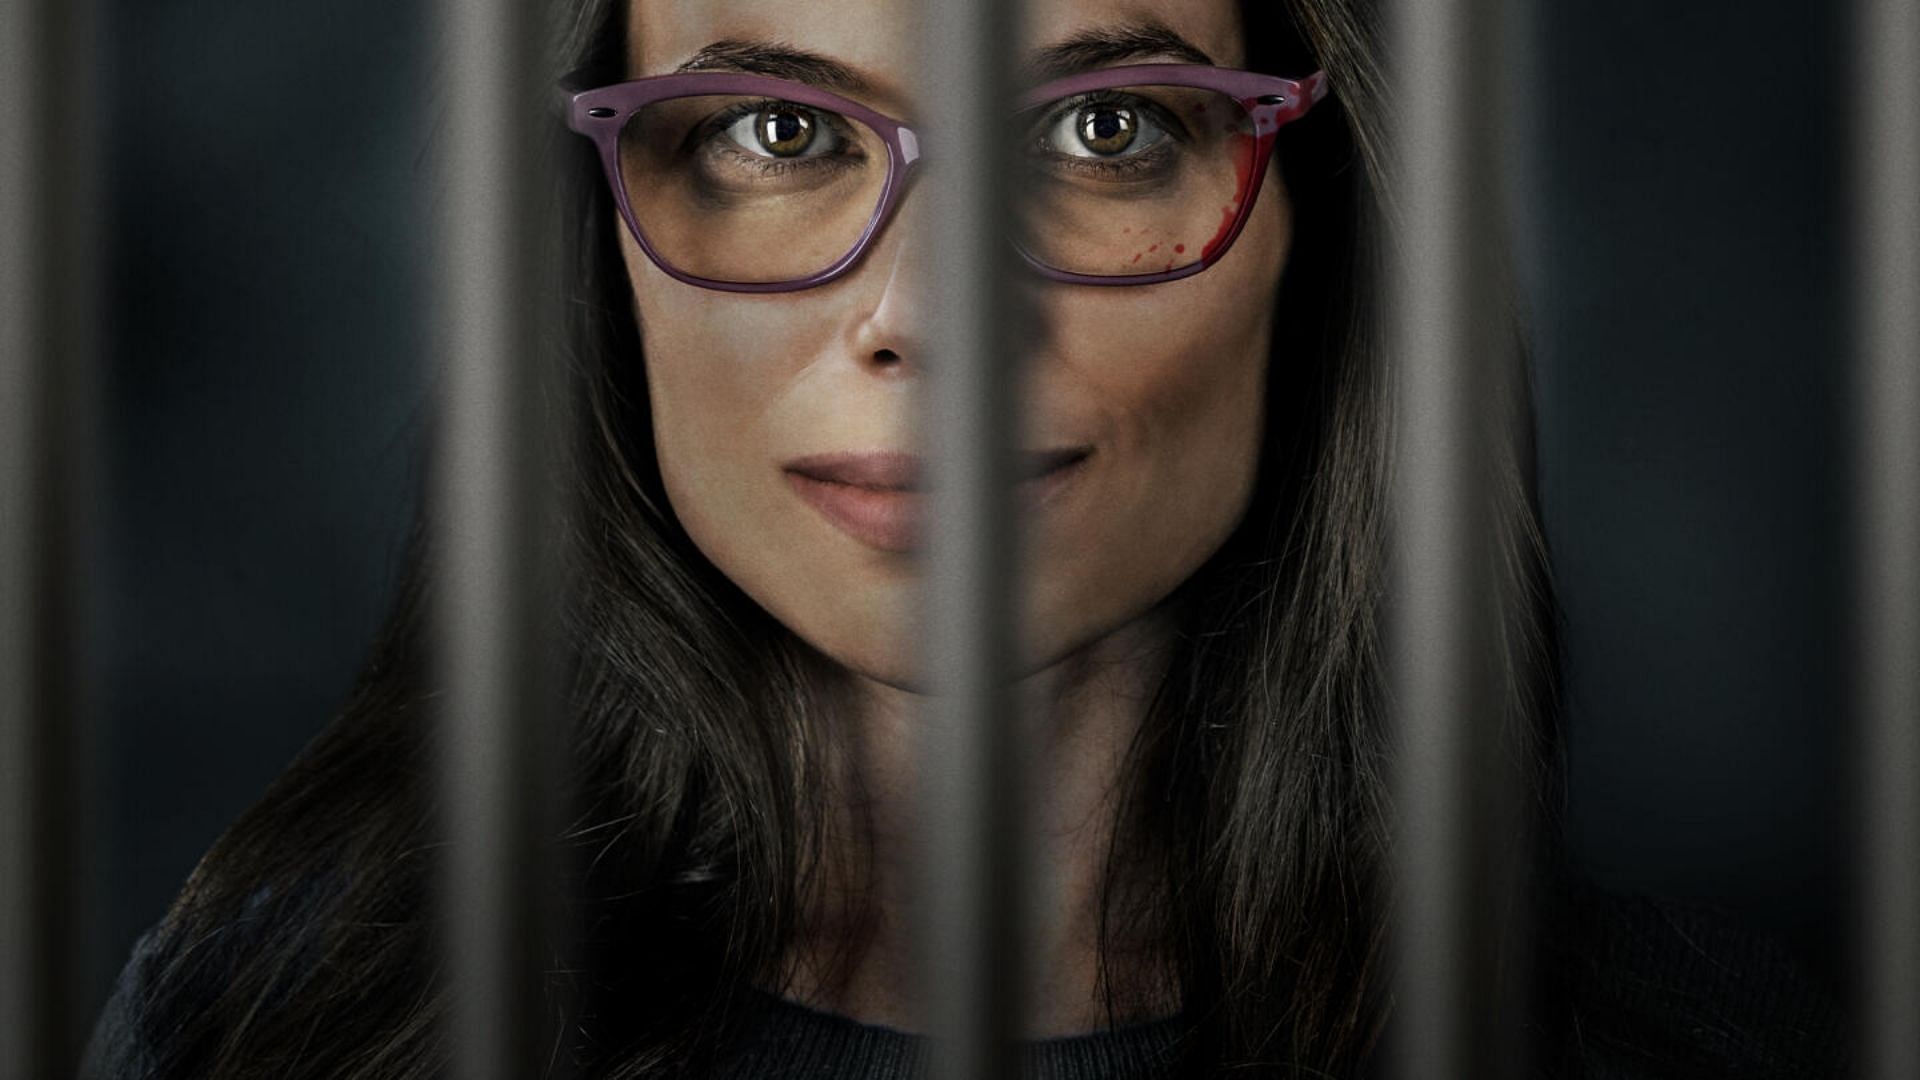 Bad Behind Bars: Jodi Arias (Image via Lifetime)